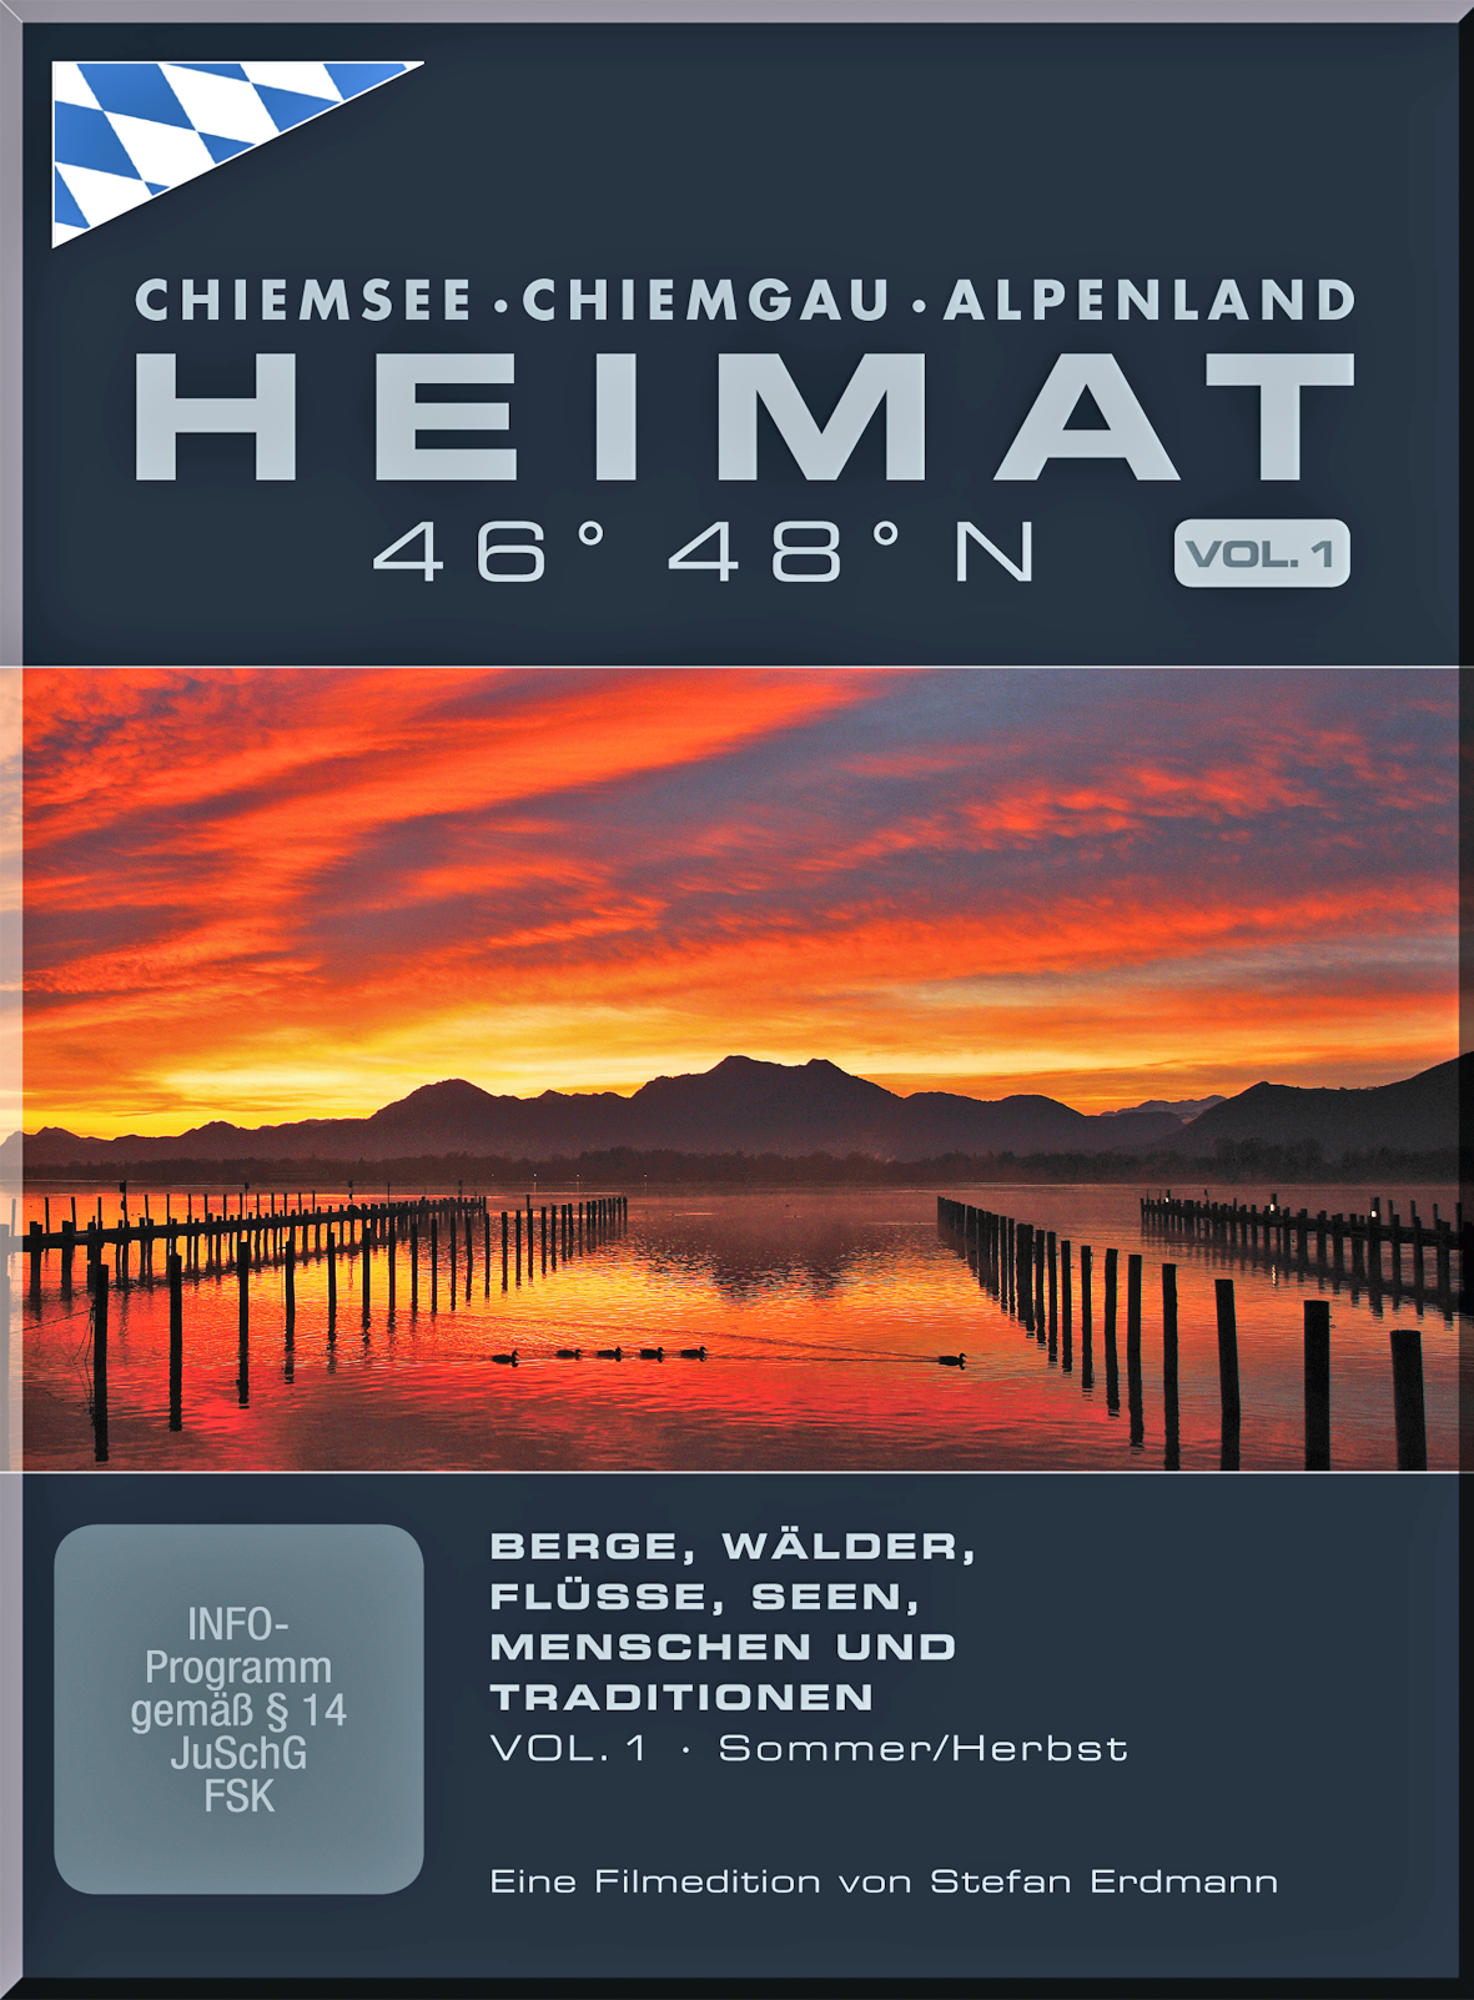 Alpenland N 46° HEIMAT - Bayern Chiemsee, | 48° Blu-ray Chiemgau,